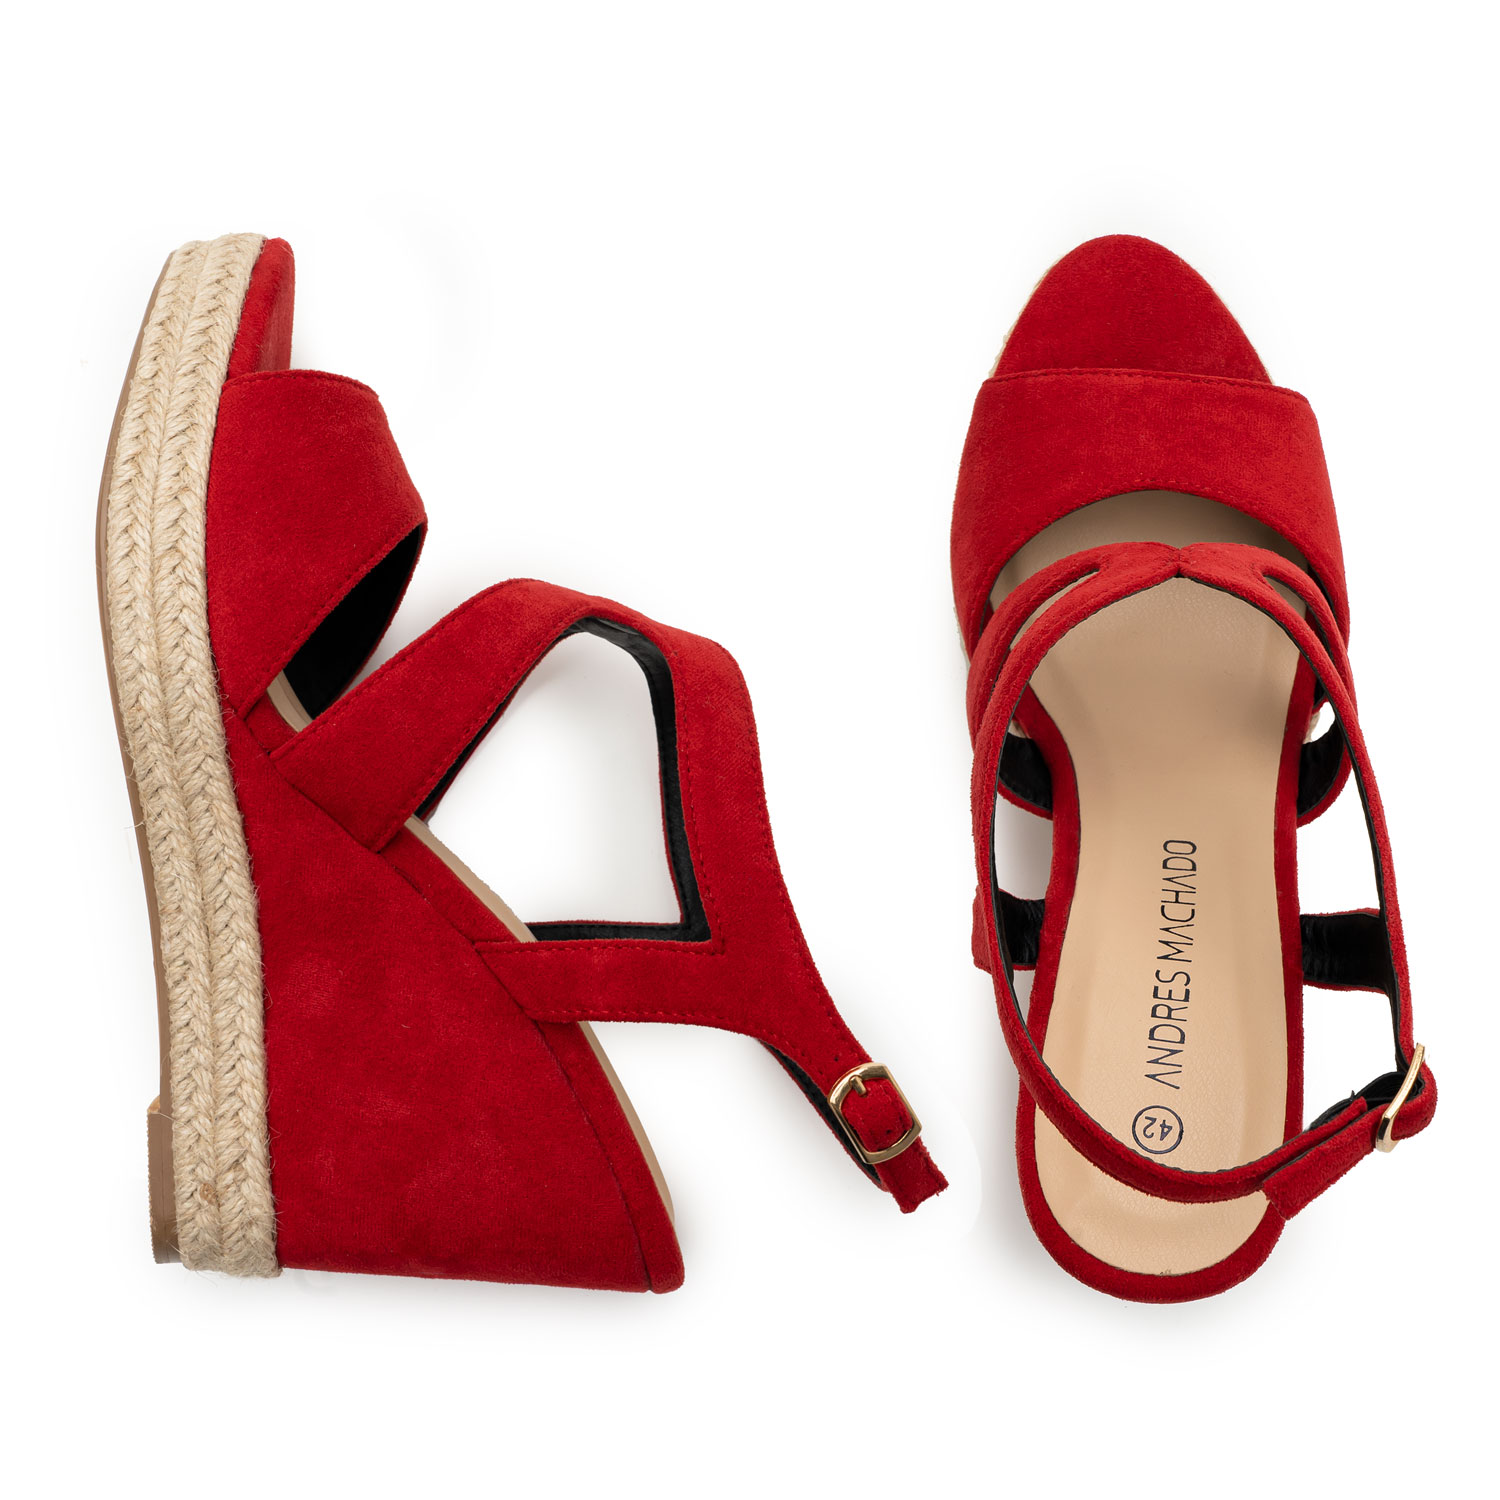 Sandalen mit Keilabsatz aus rotem Velourlederimitat 